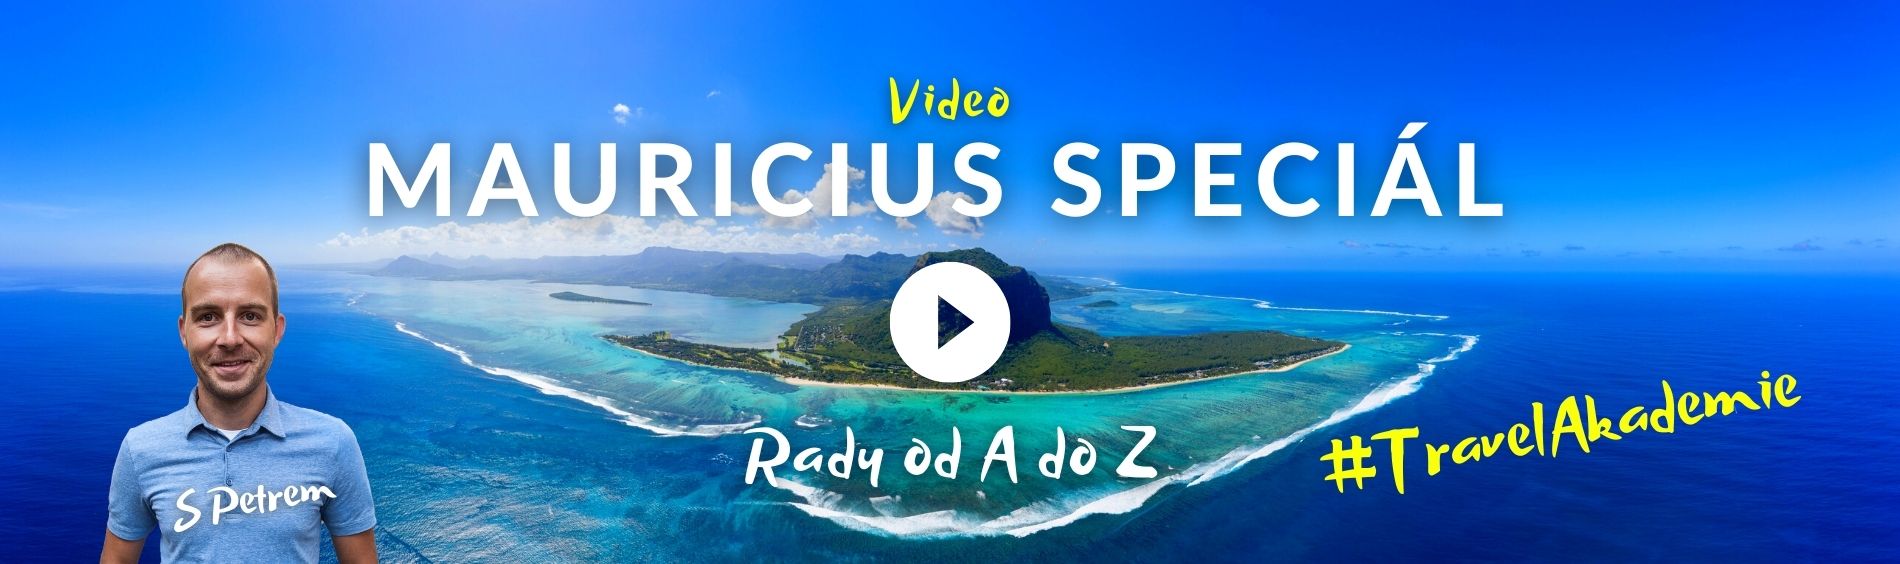 mauricius special video